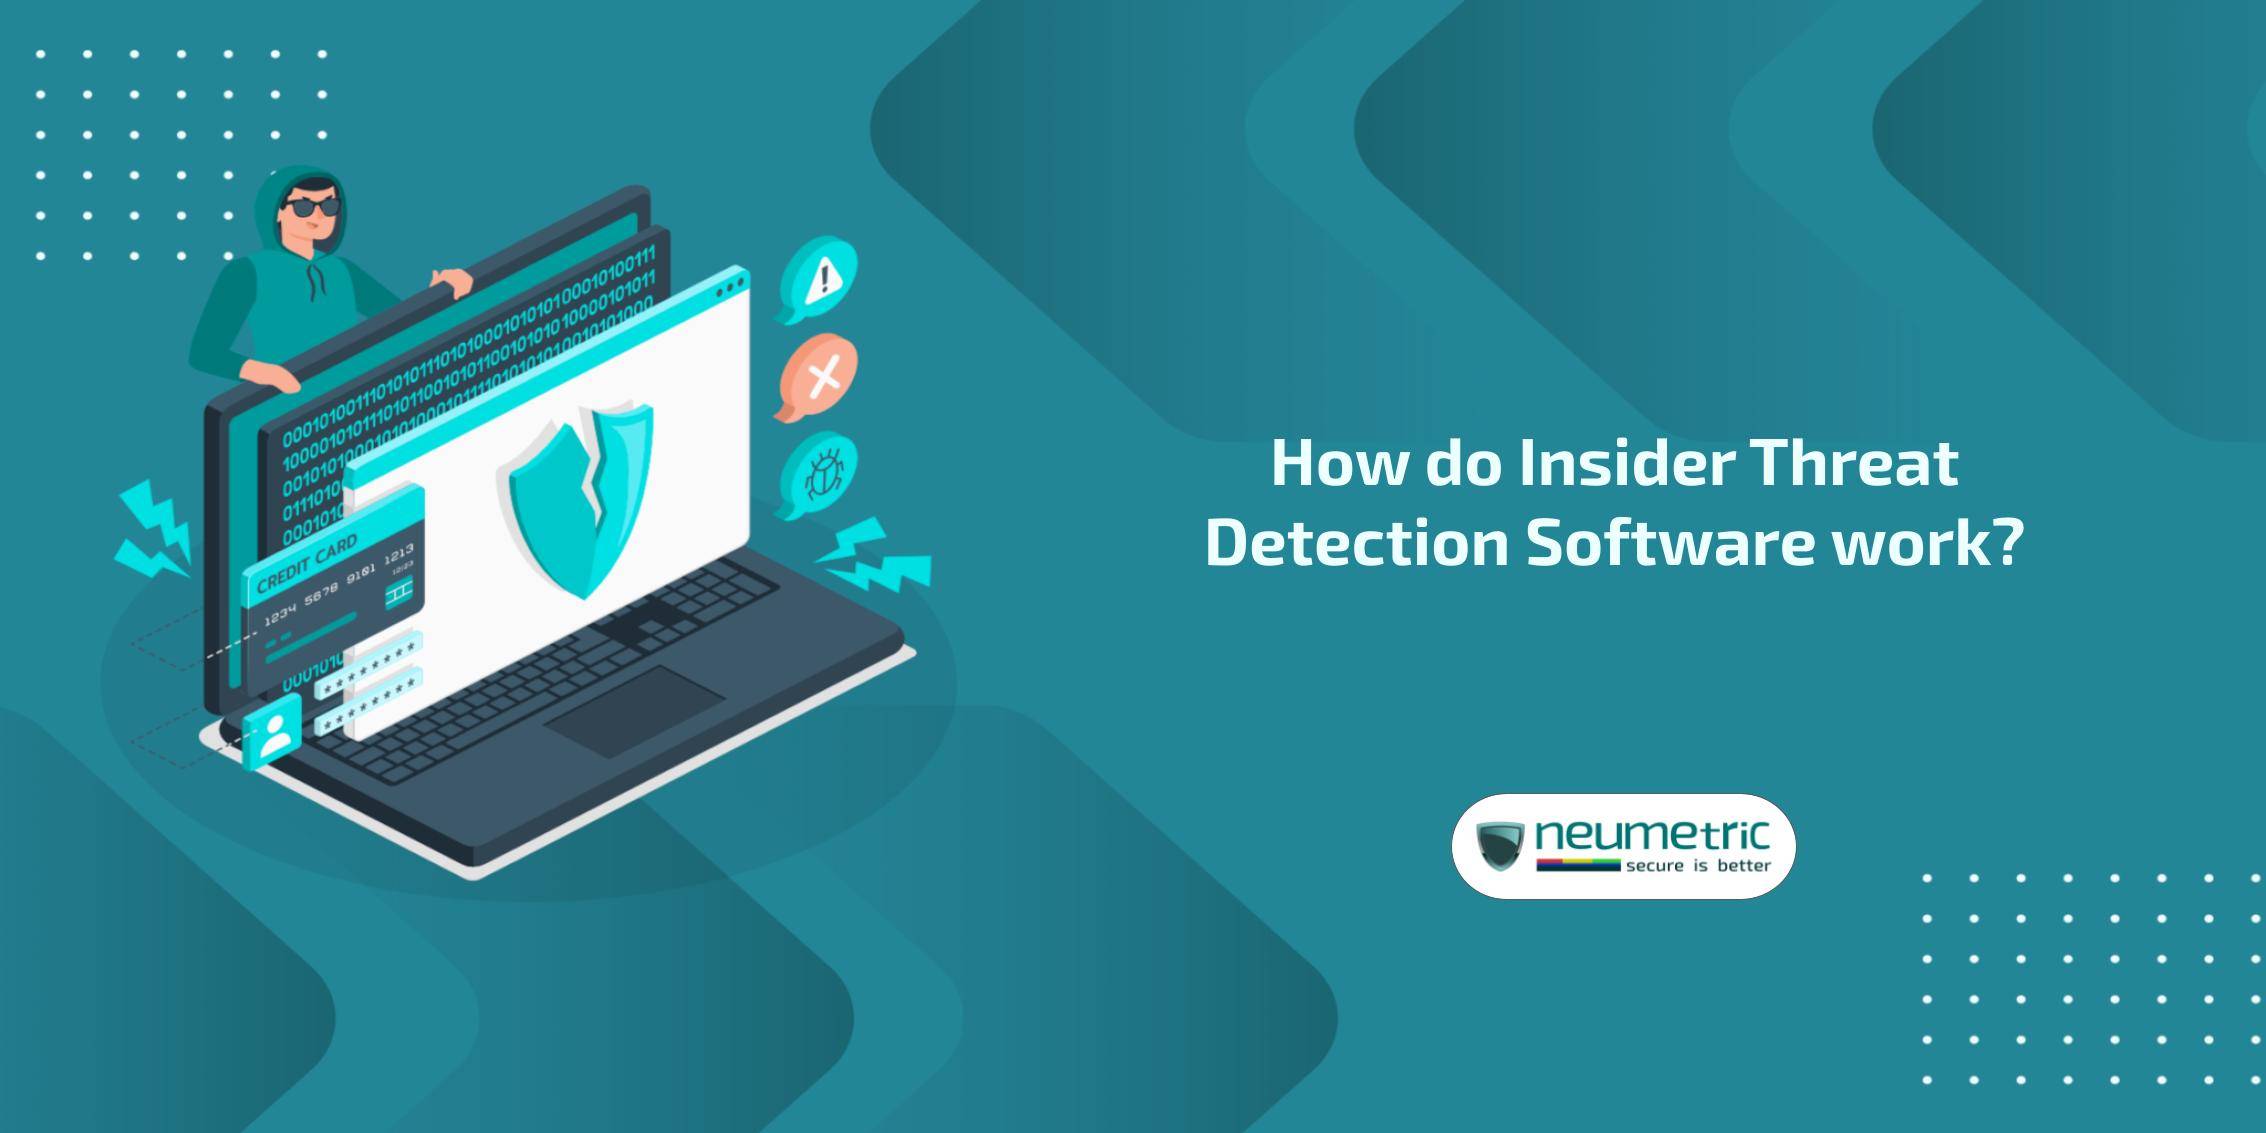 How do Insider Threat Detection Software work?